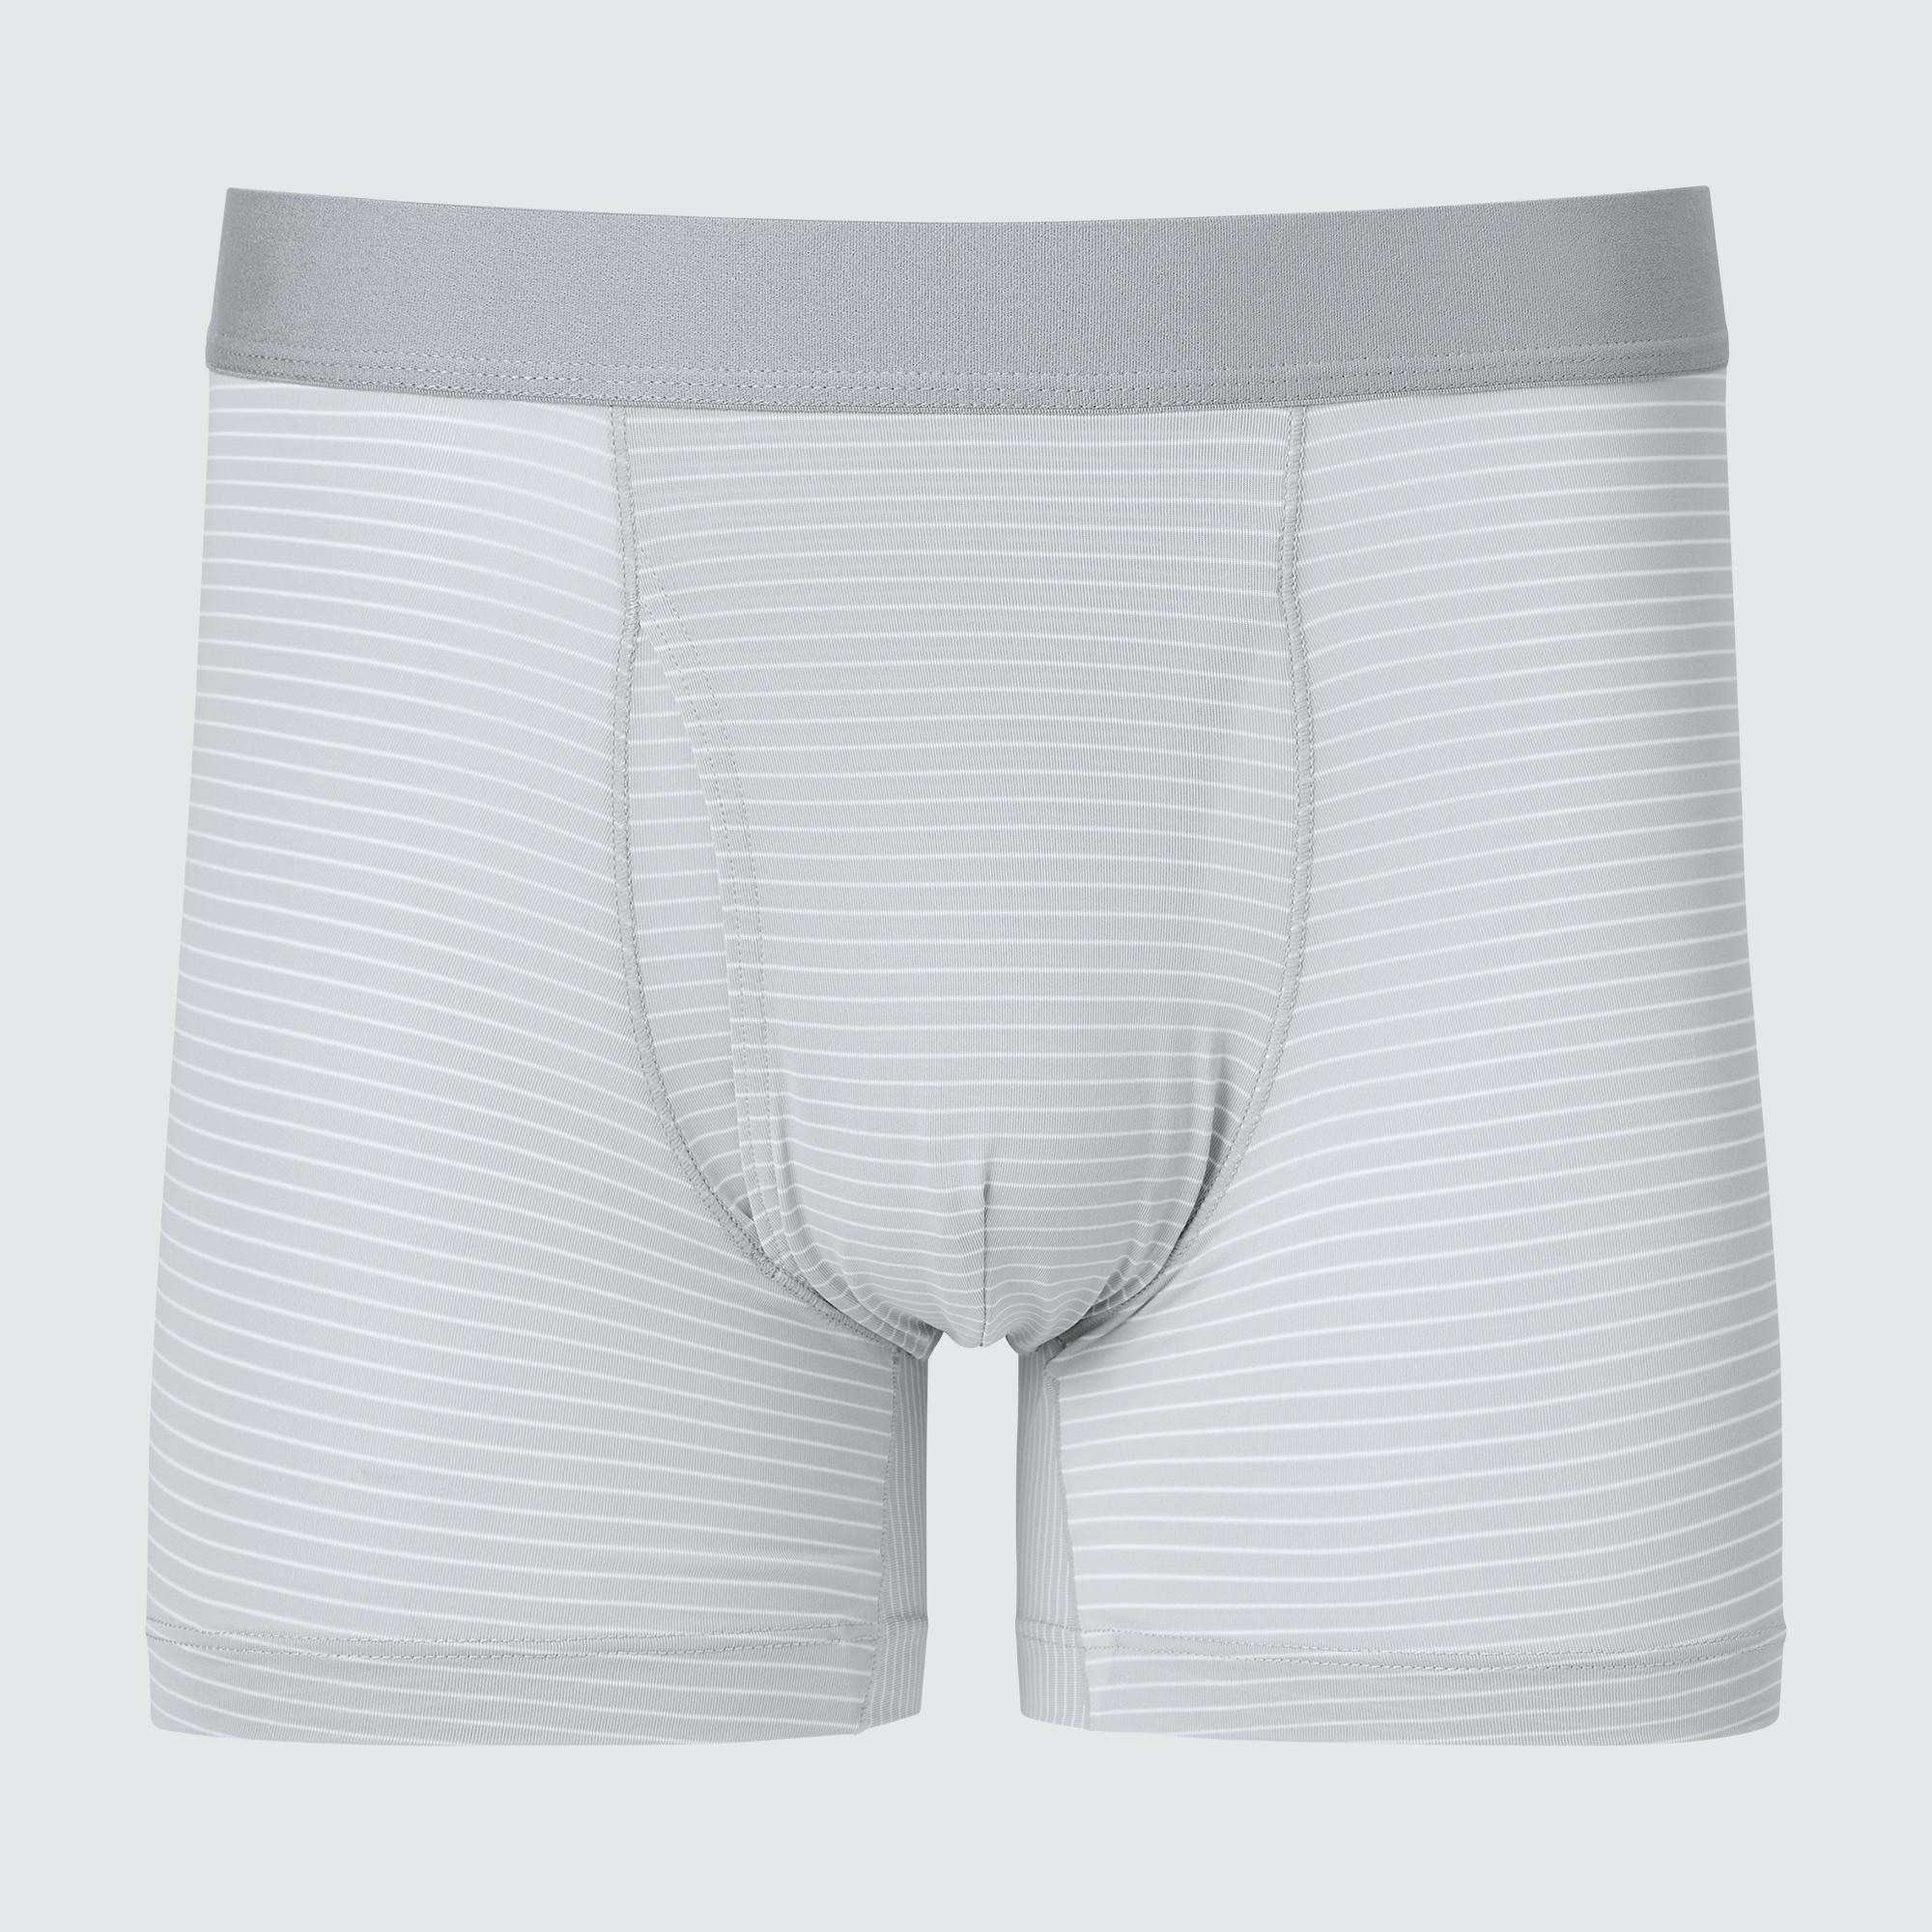 PRIA Men's Underwear / Uniqlo Airism Underwear / Uniqlo Airism Panties I